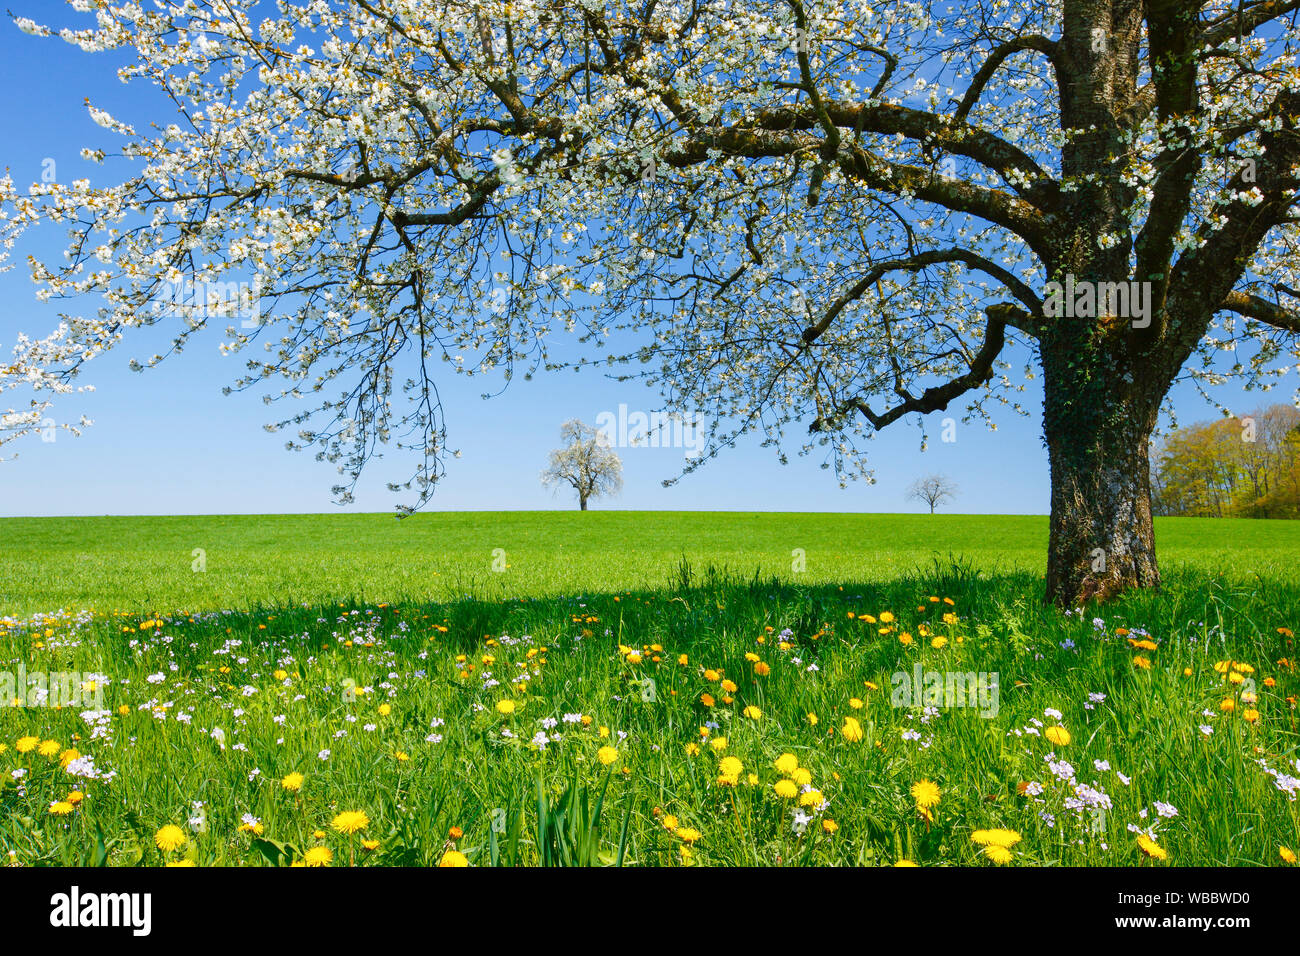 Common Pear, European Pear (Pyrus communis). Flowering tree in spring. Switzerland Stock Photo